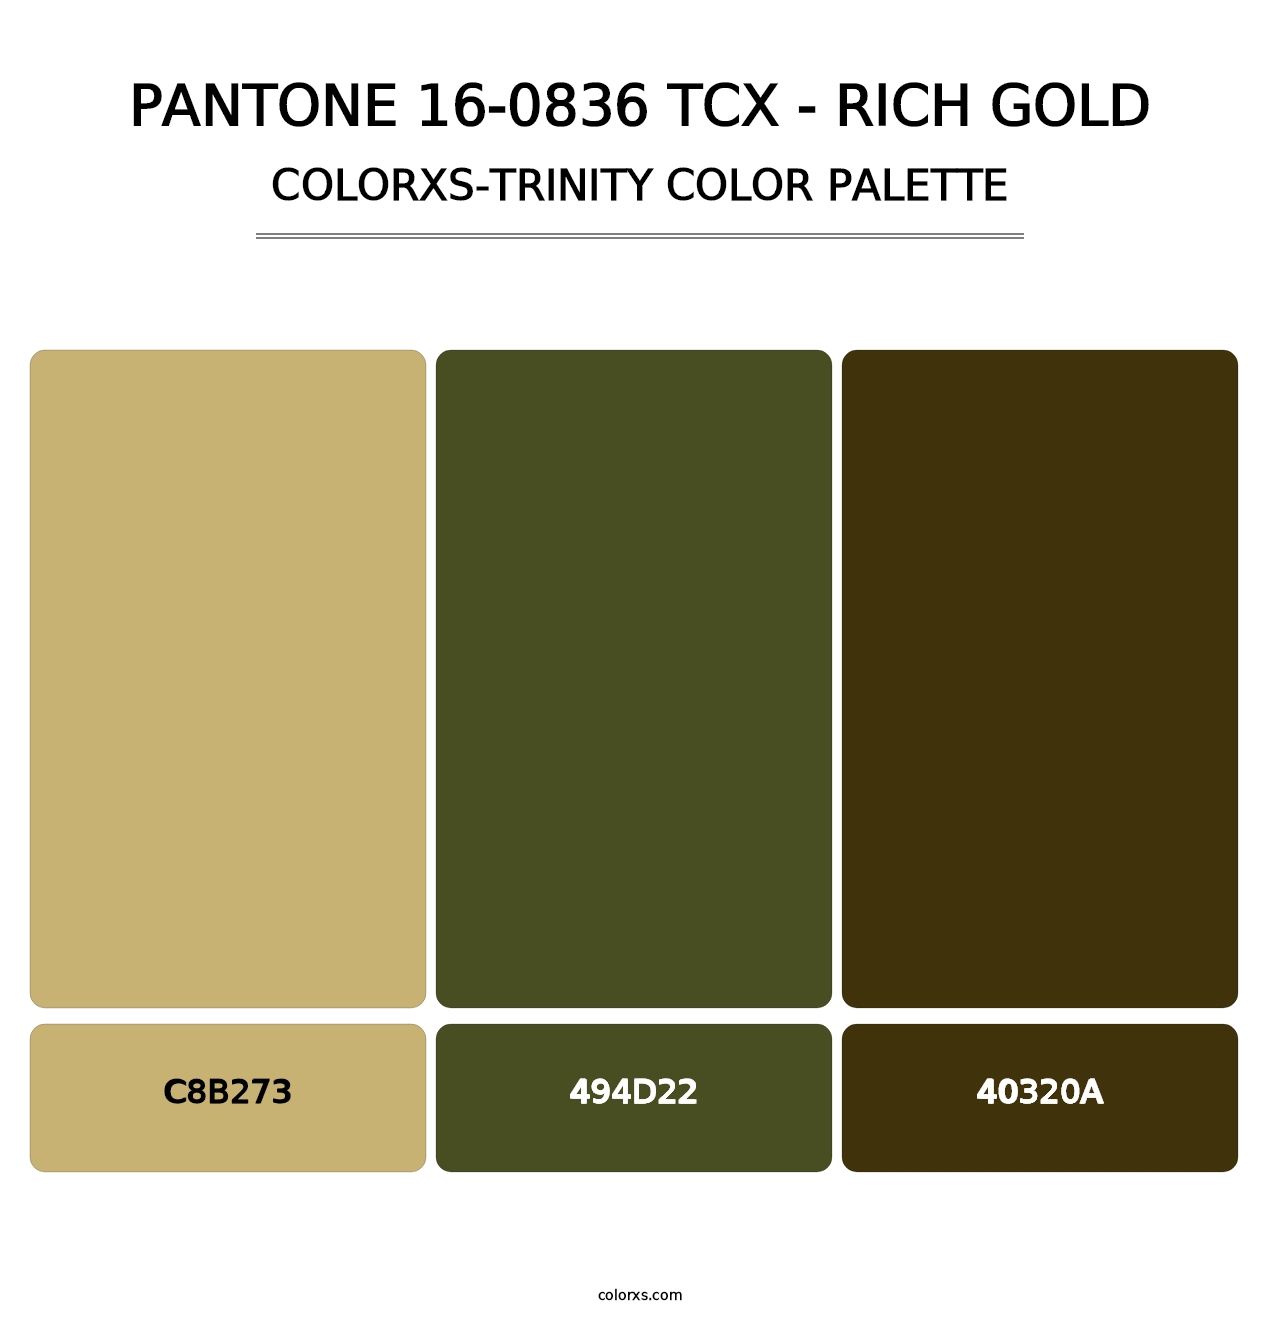 PANTONE 16-0836 TCX - Rich Gold - Colorxs Trinity Palette